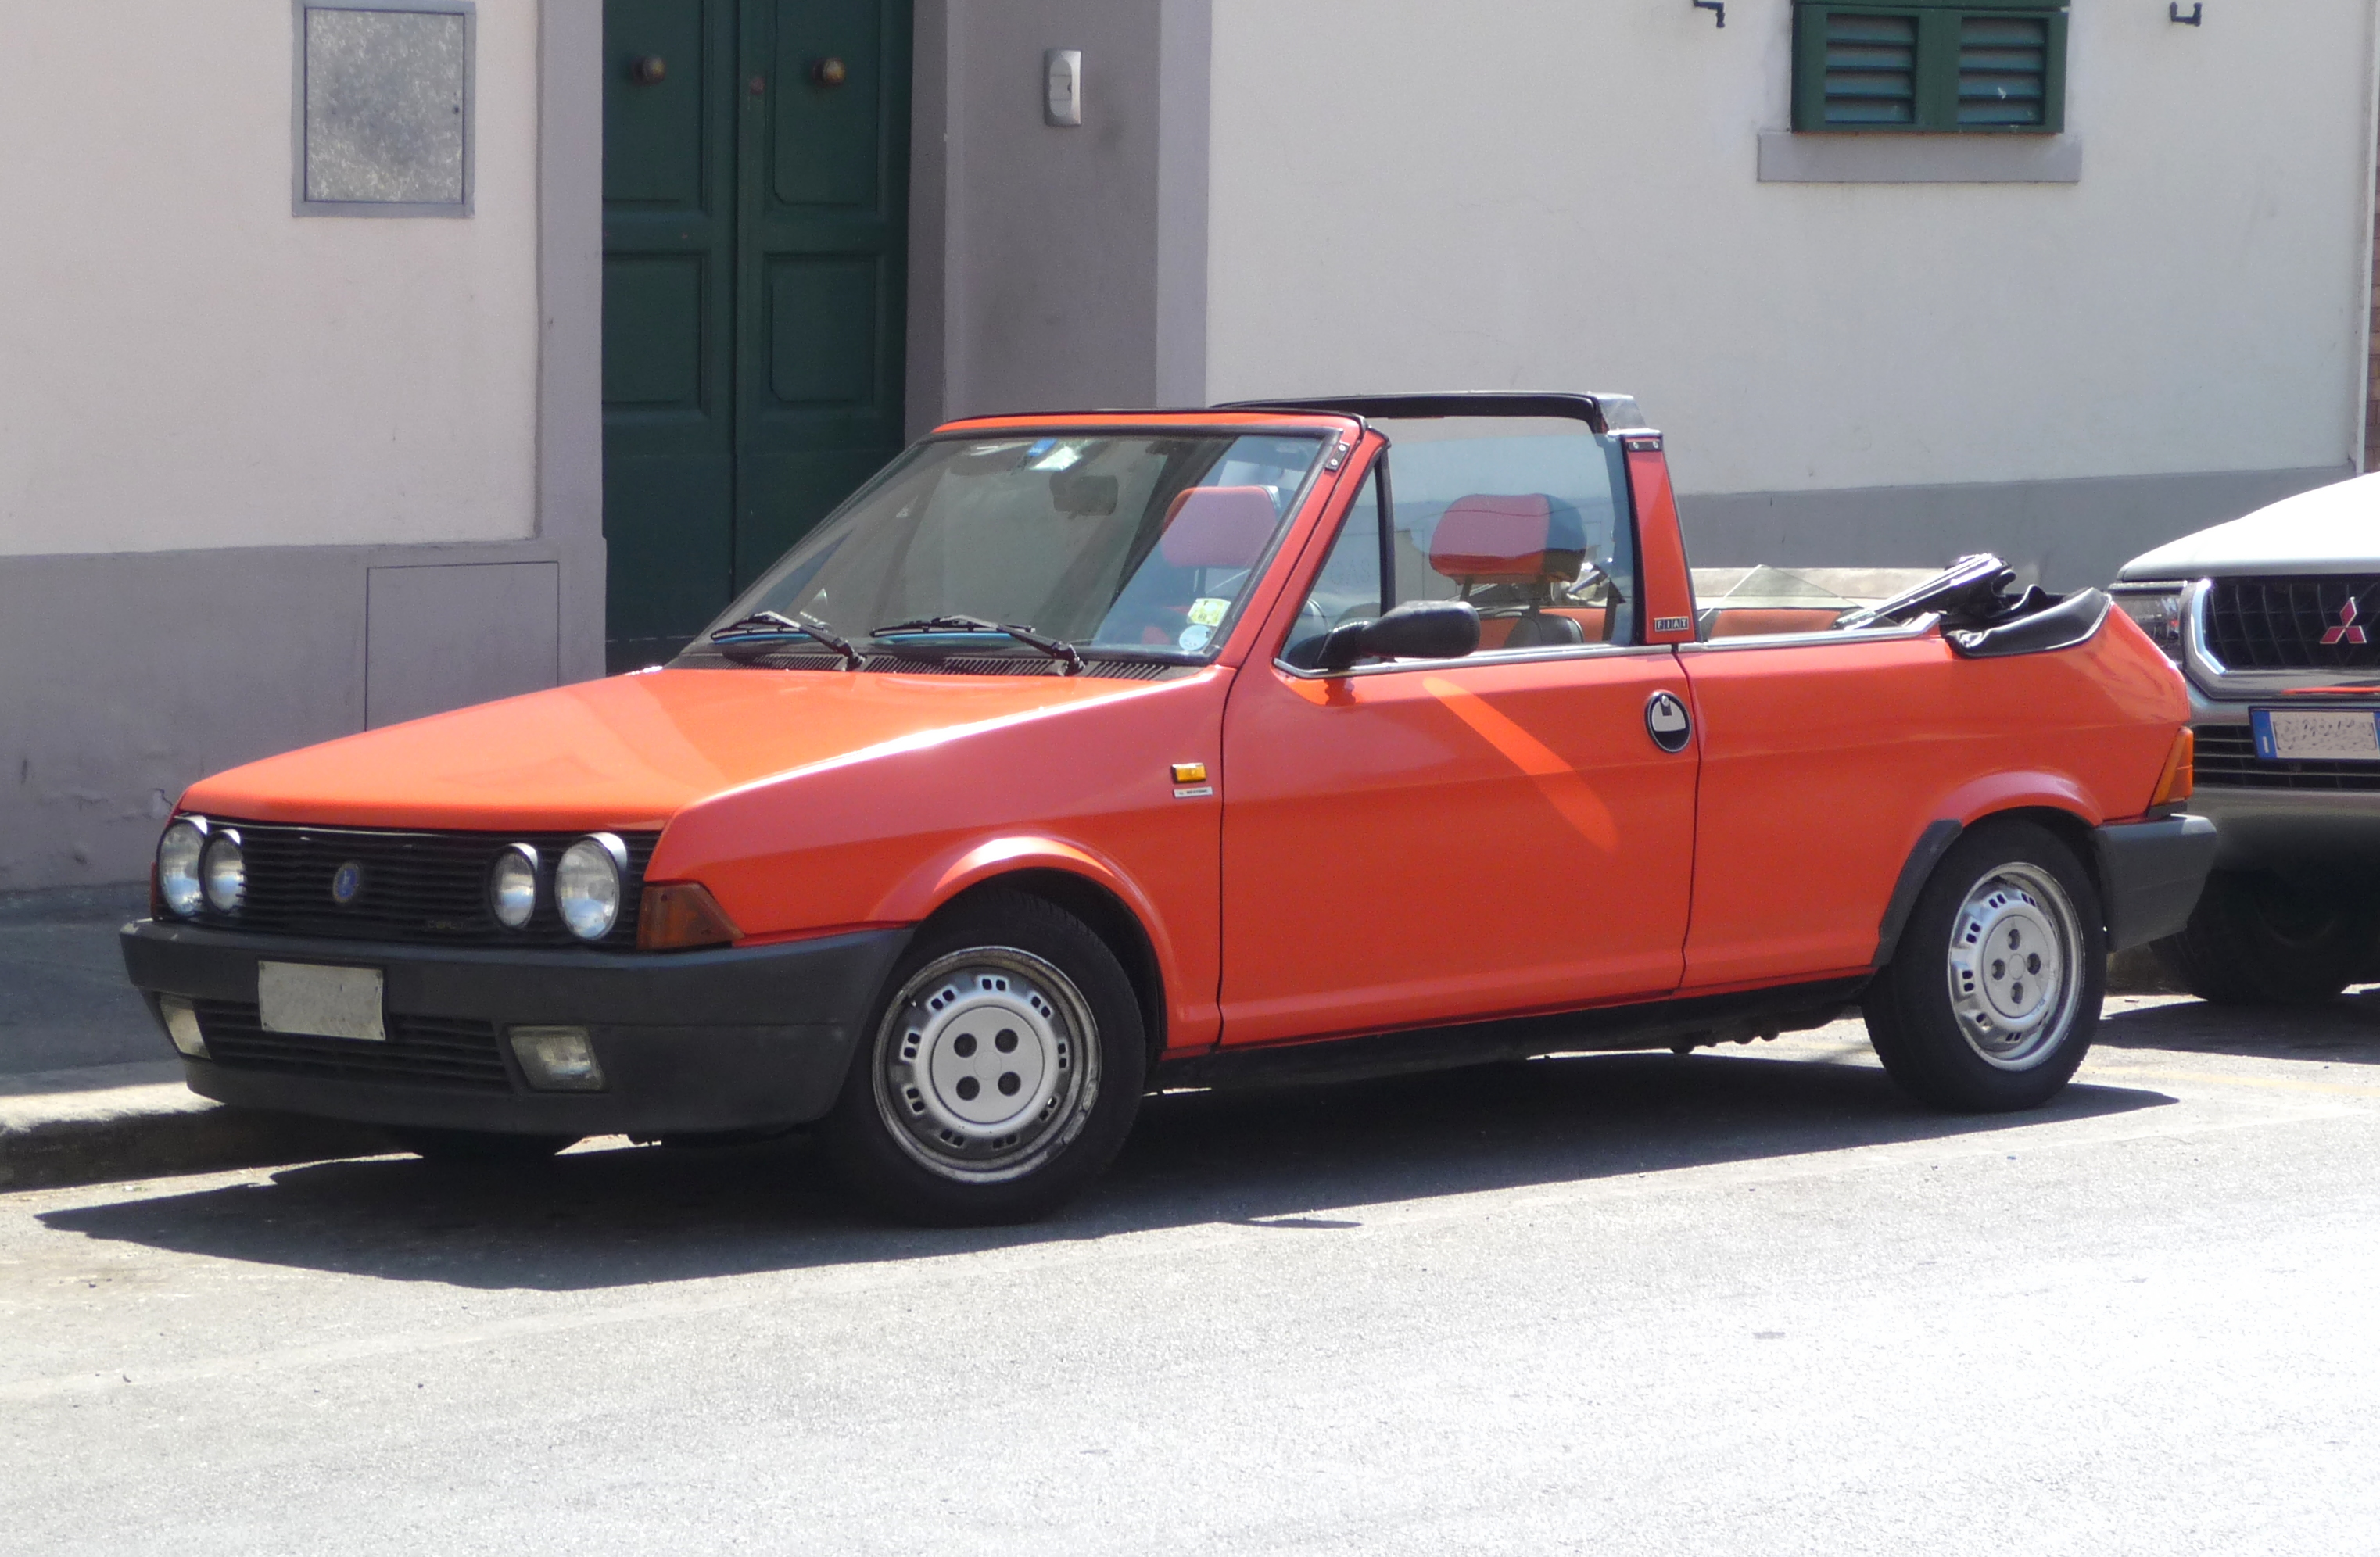 Fiat Ritmo Cabriolet